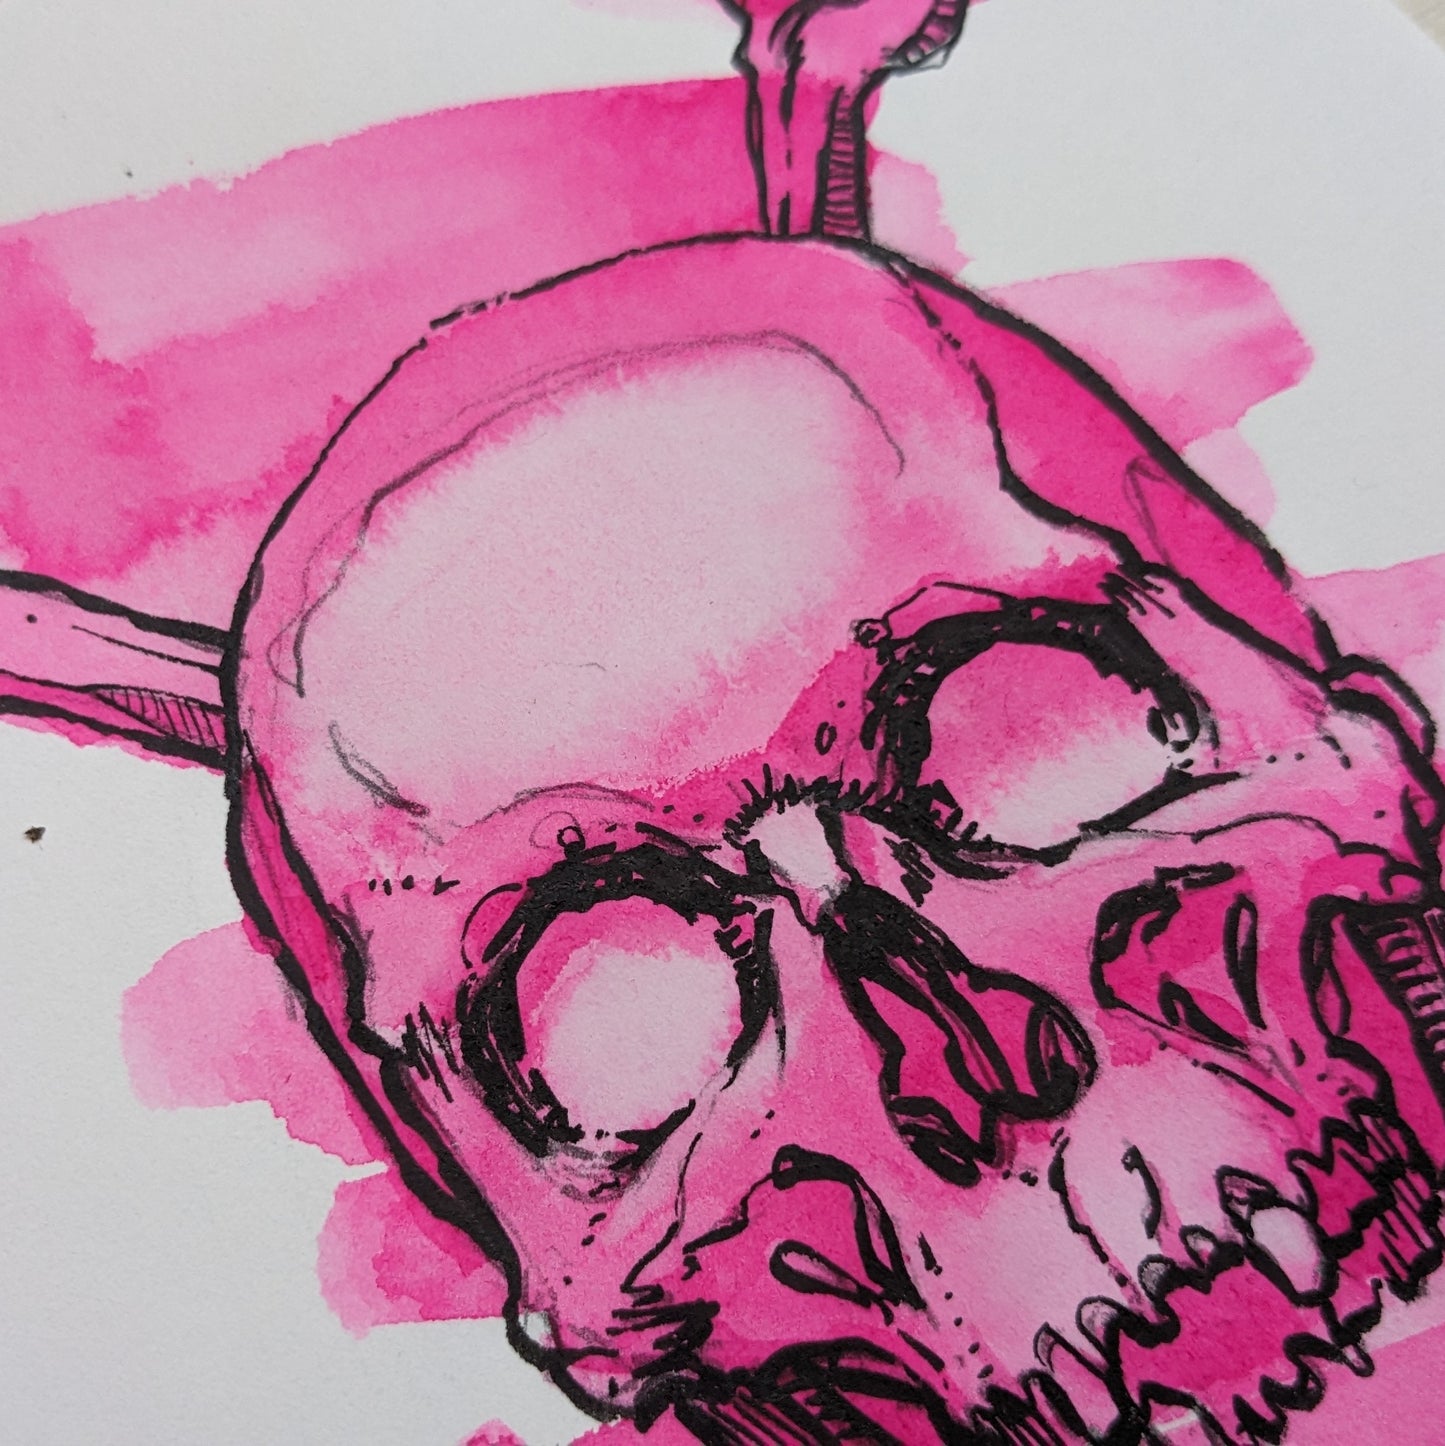 A5 Skull x Bones Pink Watercolour + Ink Original Artwork